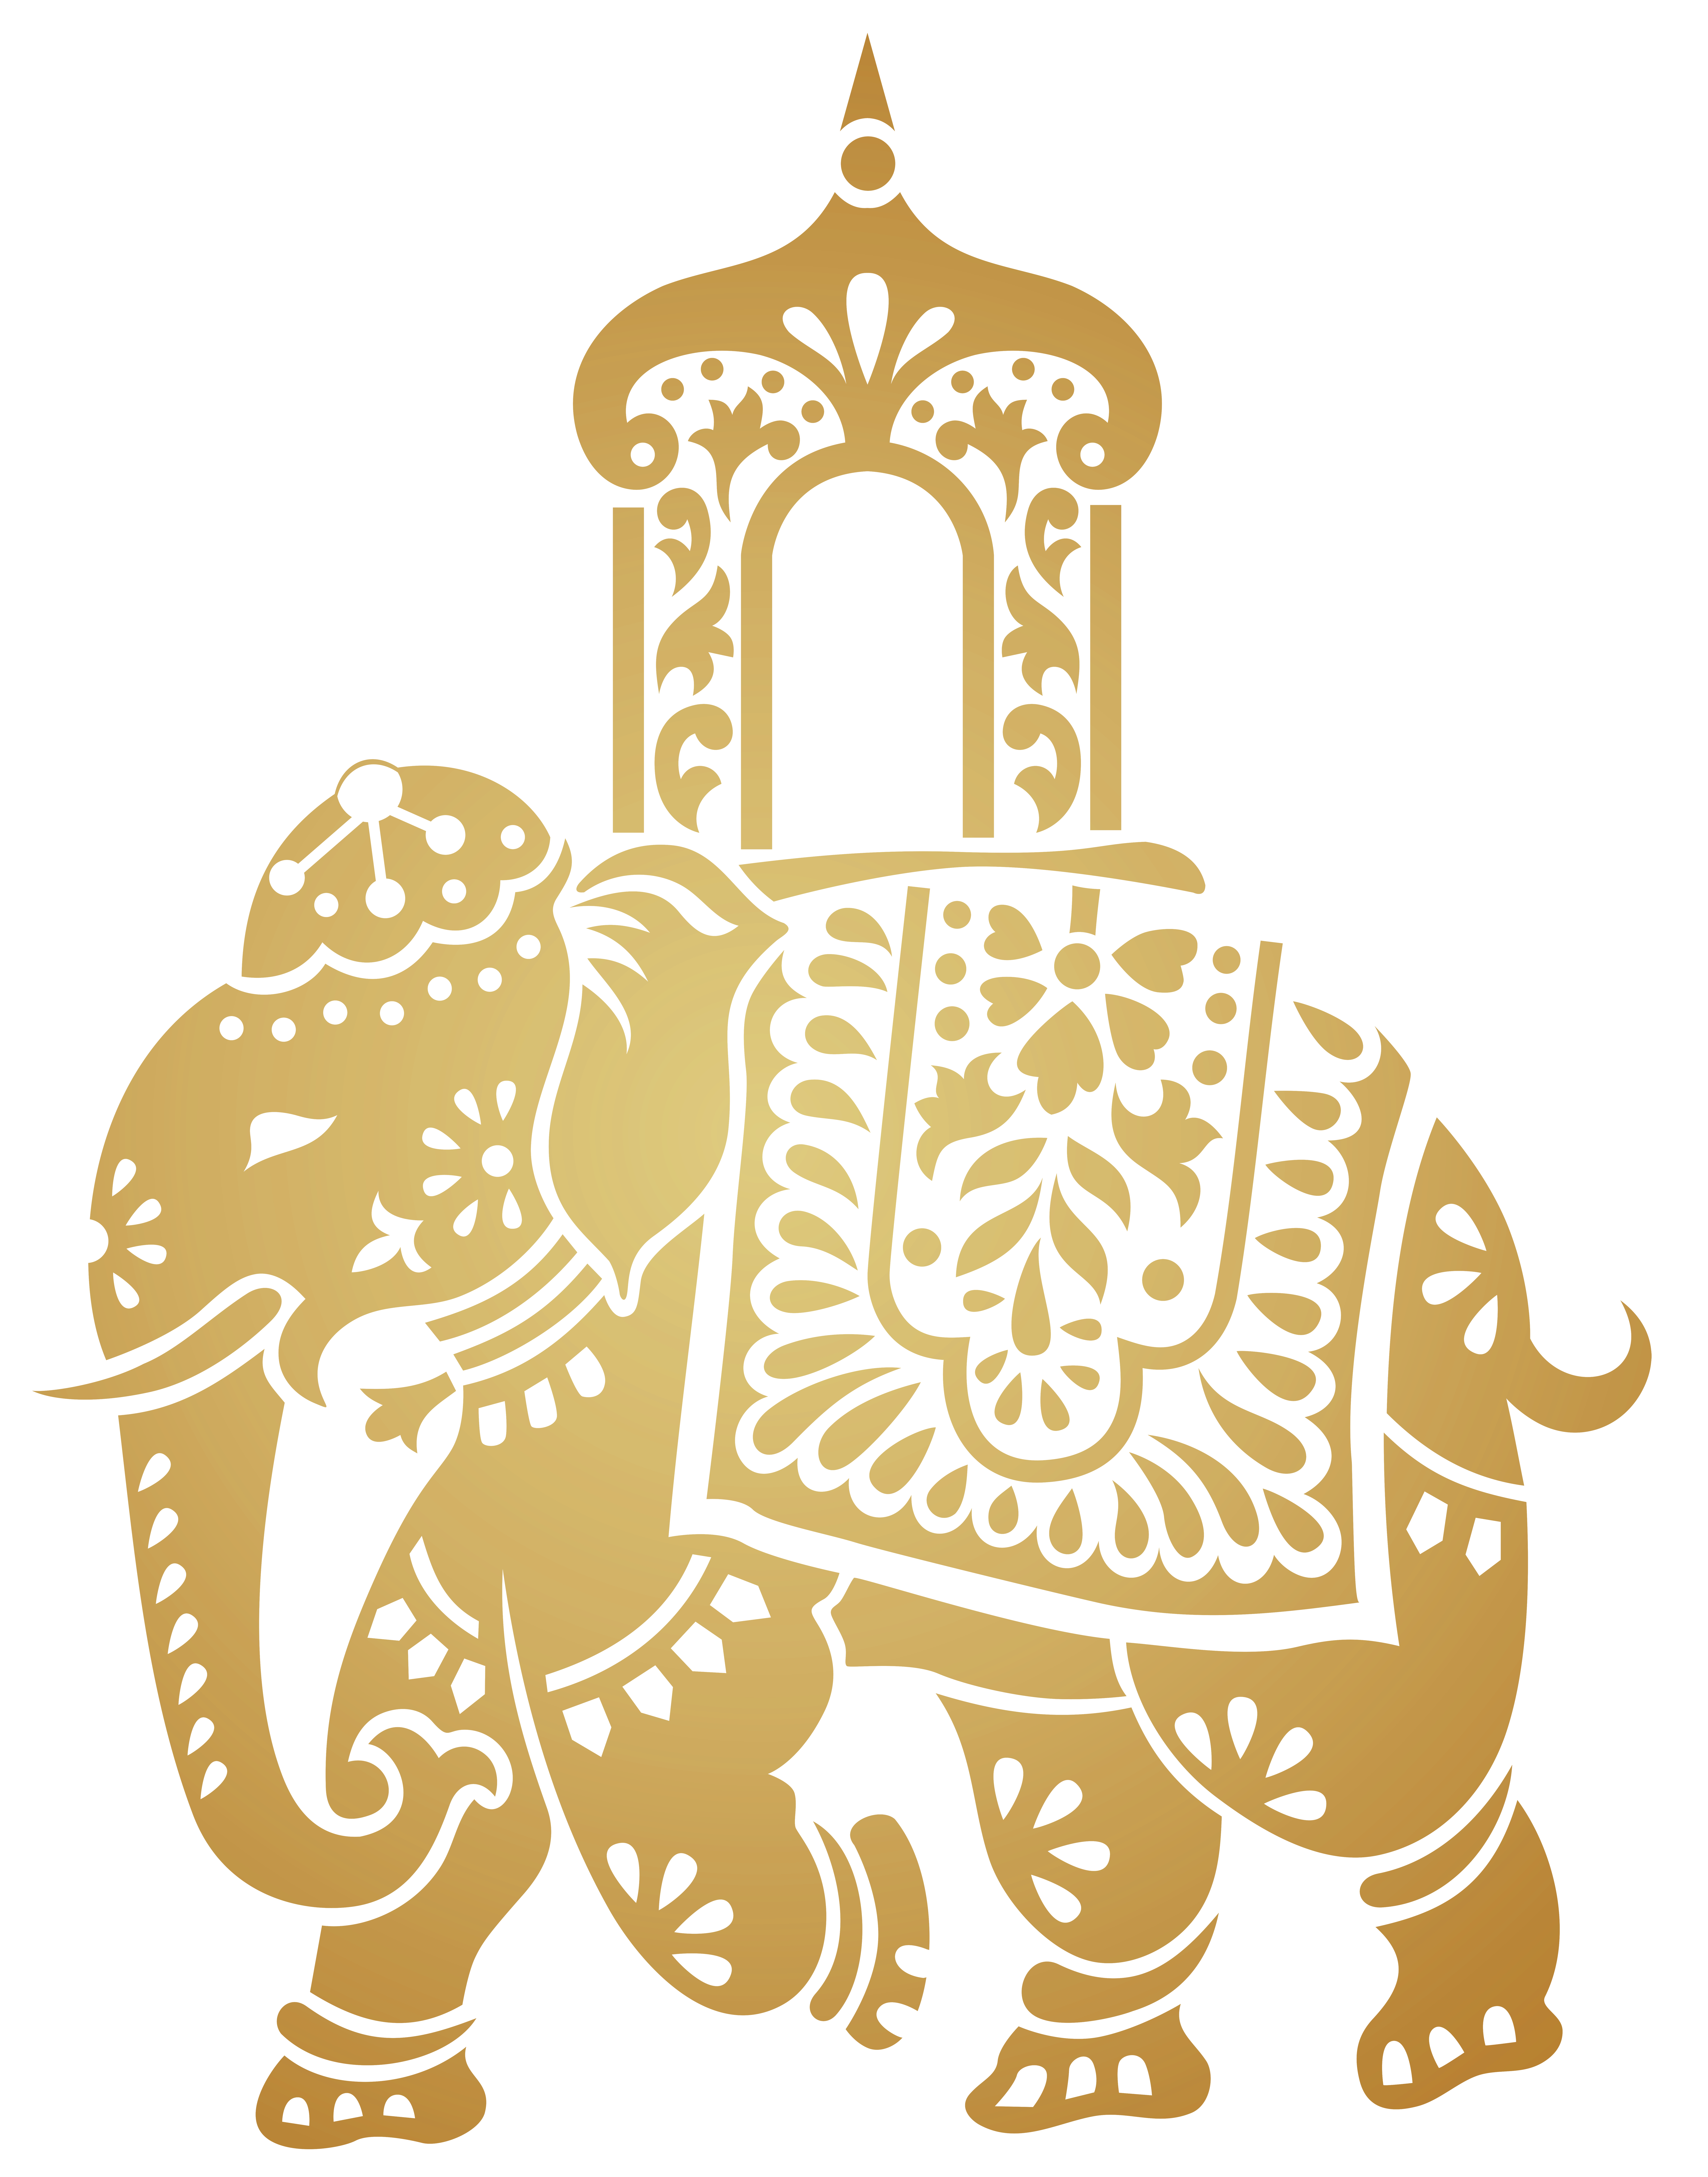 Decorative Indian Elephant Transparent Clip Art Image.